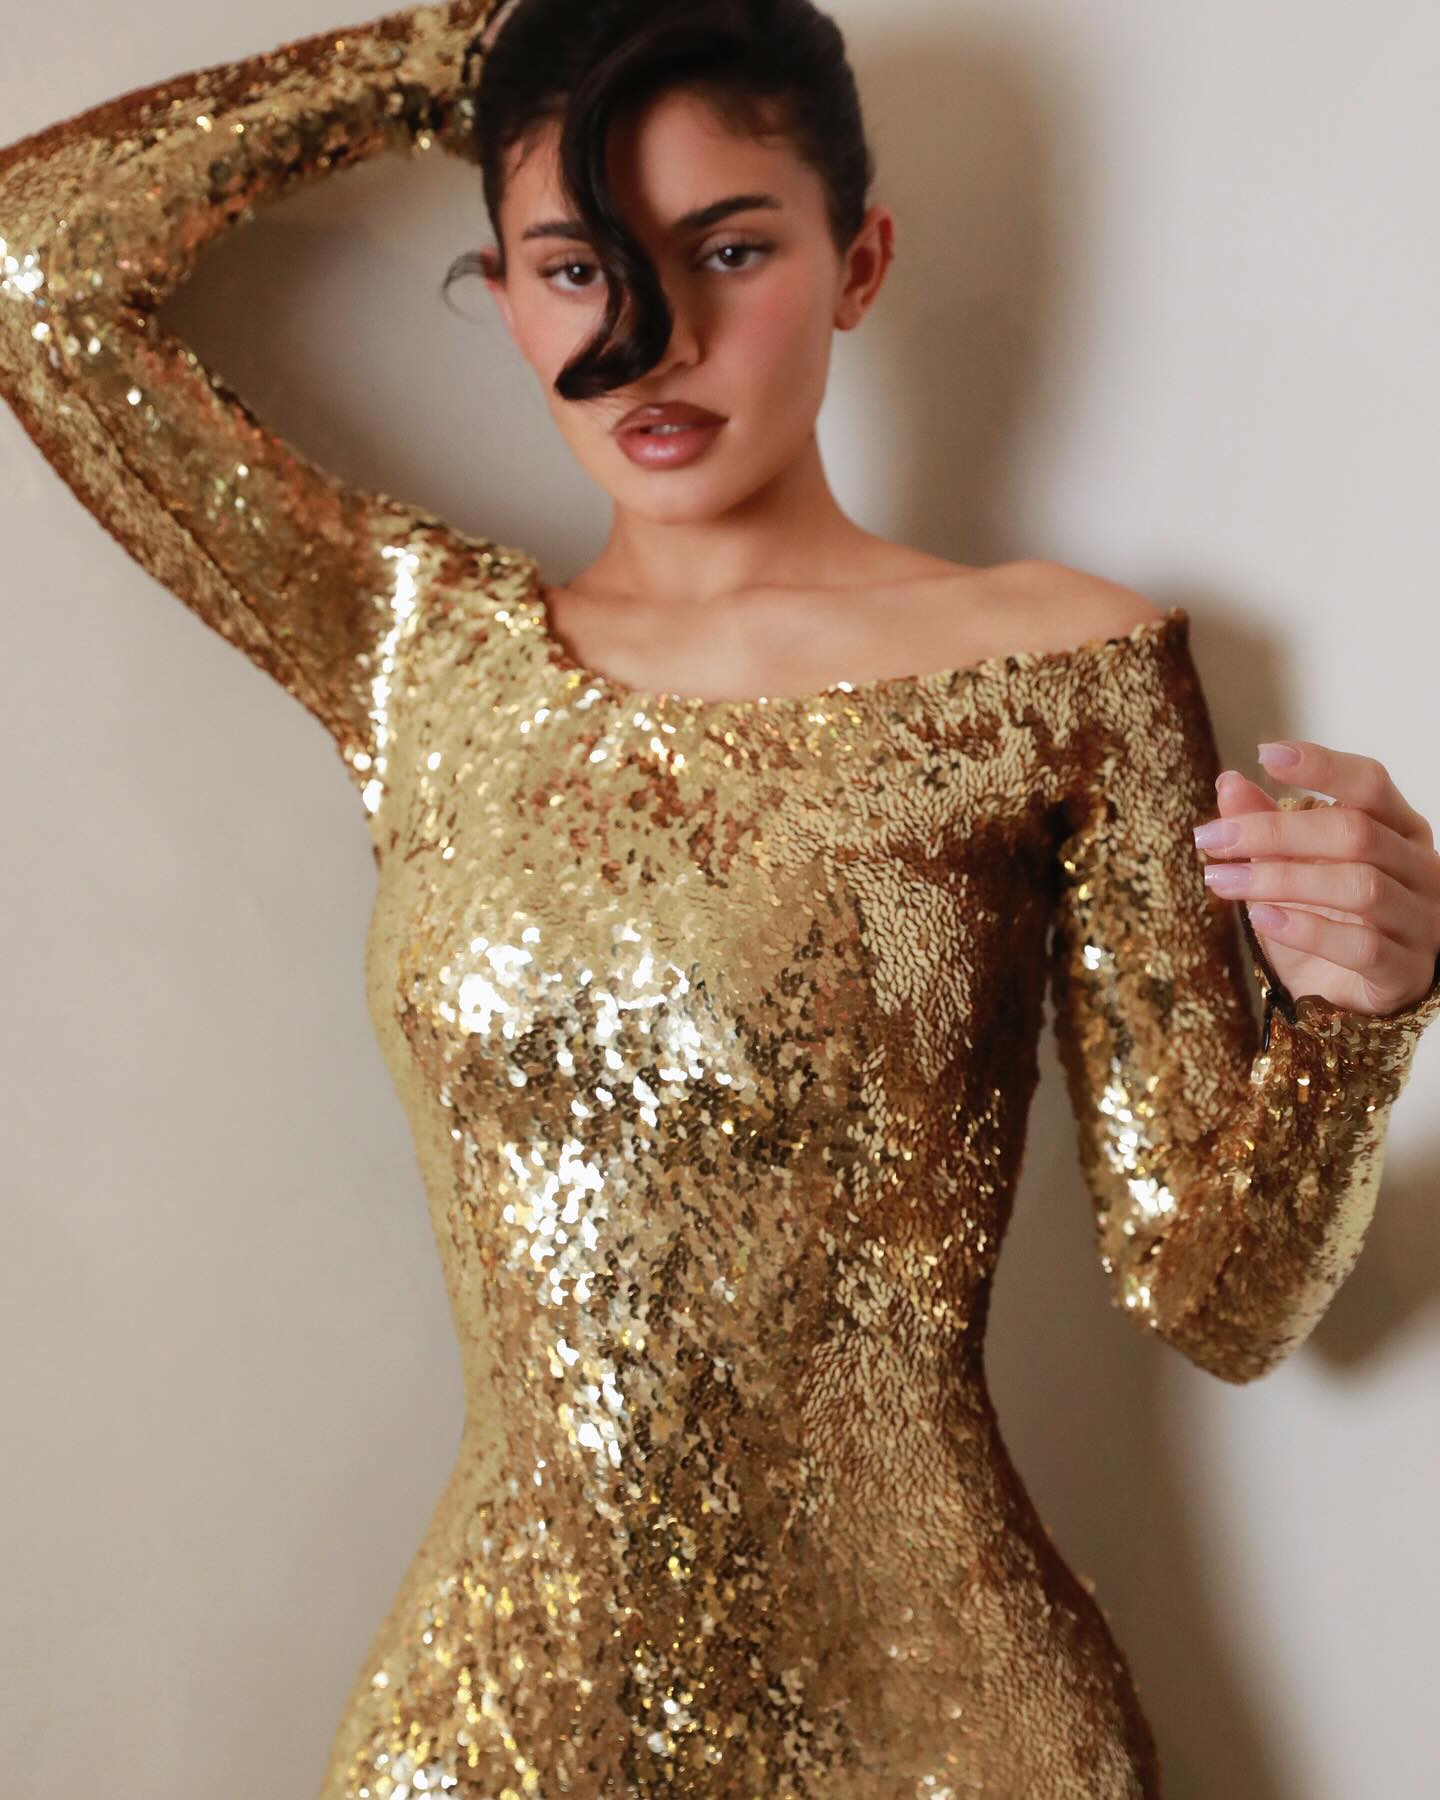 Photos n°3 : Kylie Jenner’s Gold Christmas Dress!